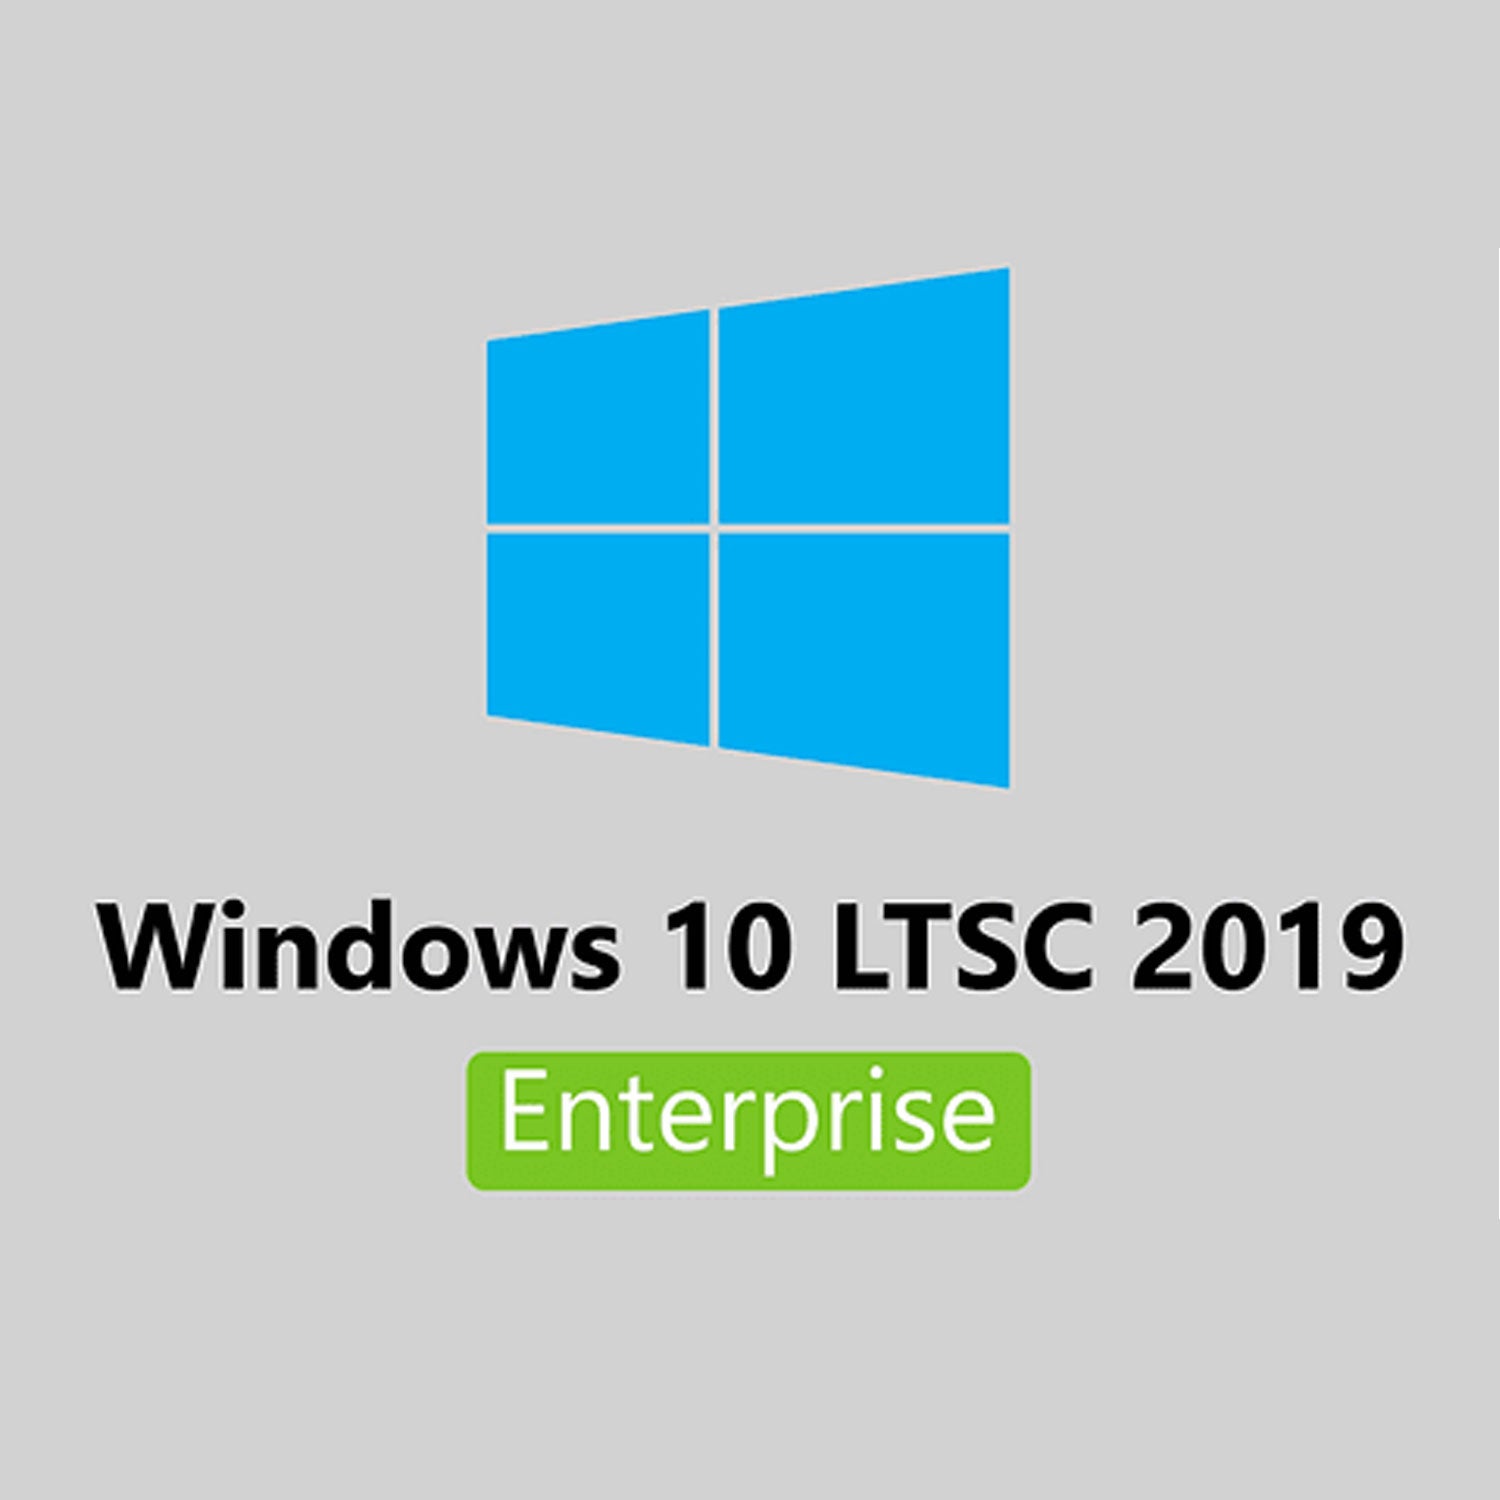 Windows 10 Enterprise LTSC 2019 Product Key License Digital - Instant cdkey